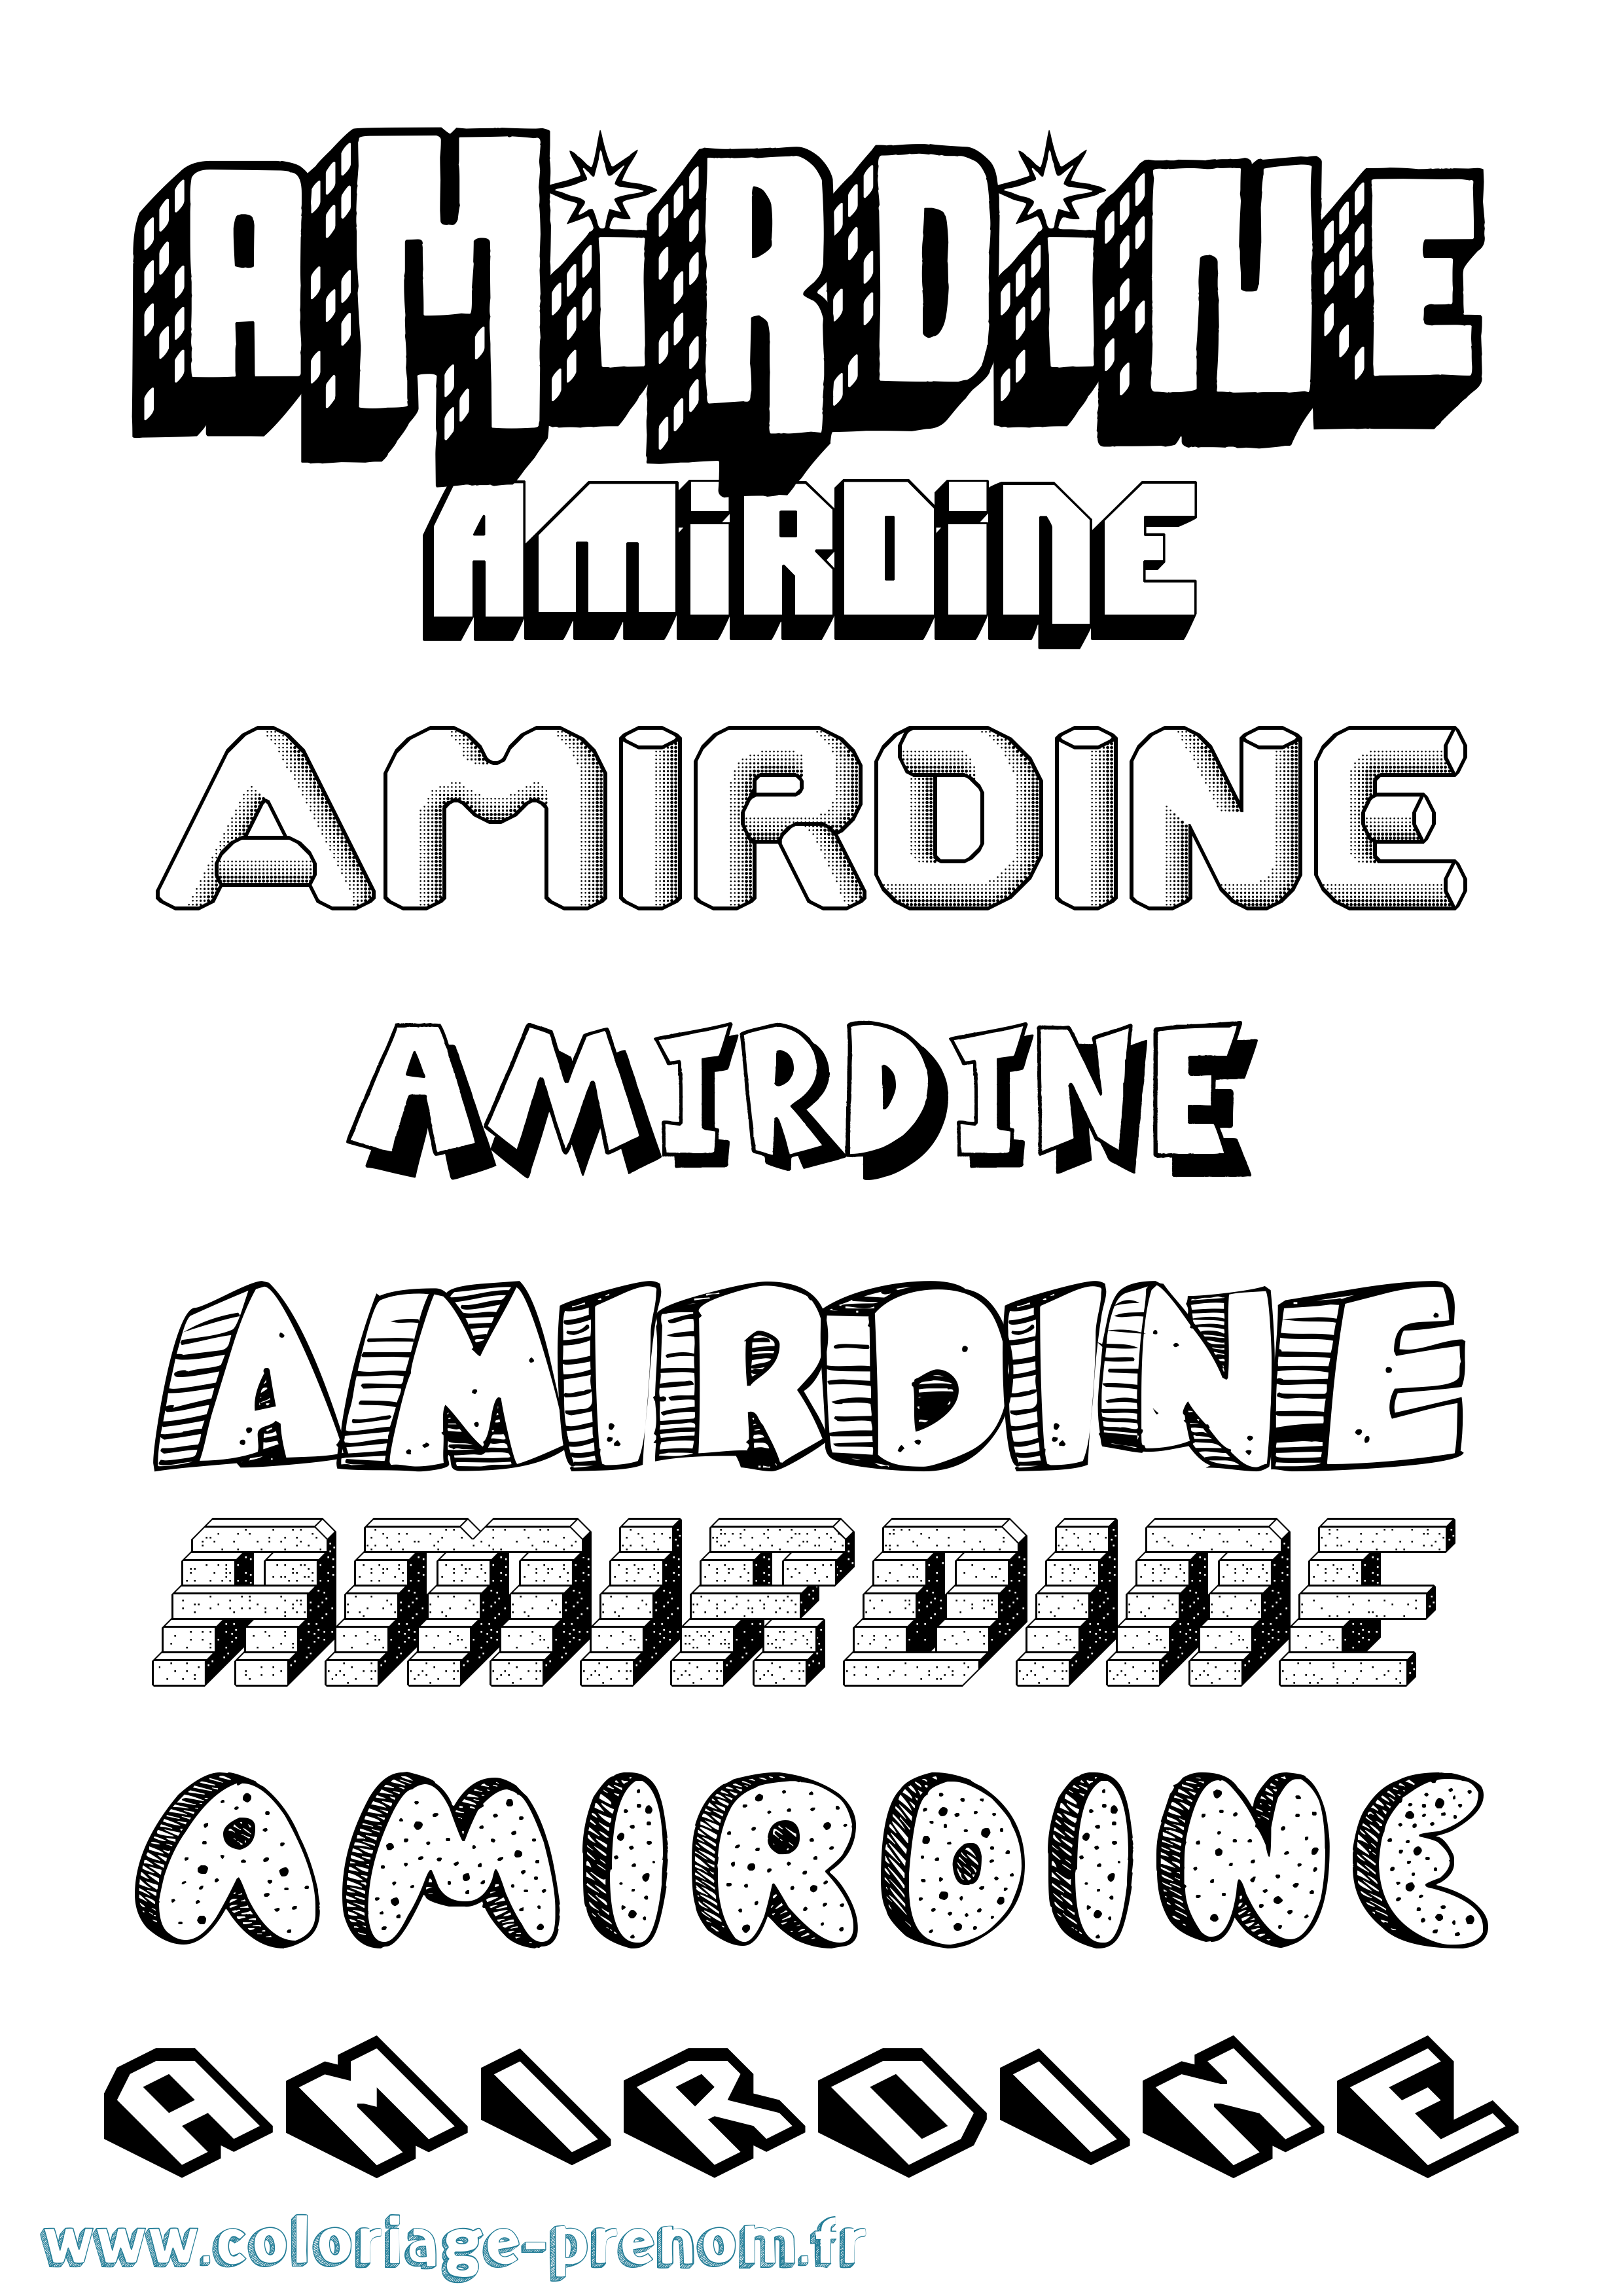 Coloriage prénom Amirdine Effet 3D